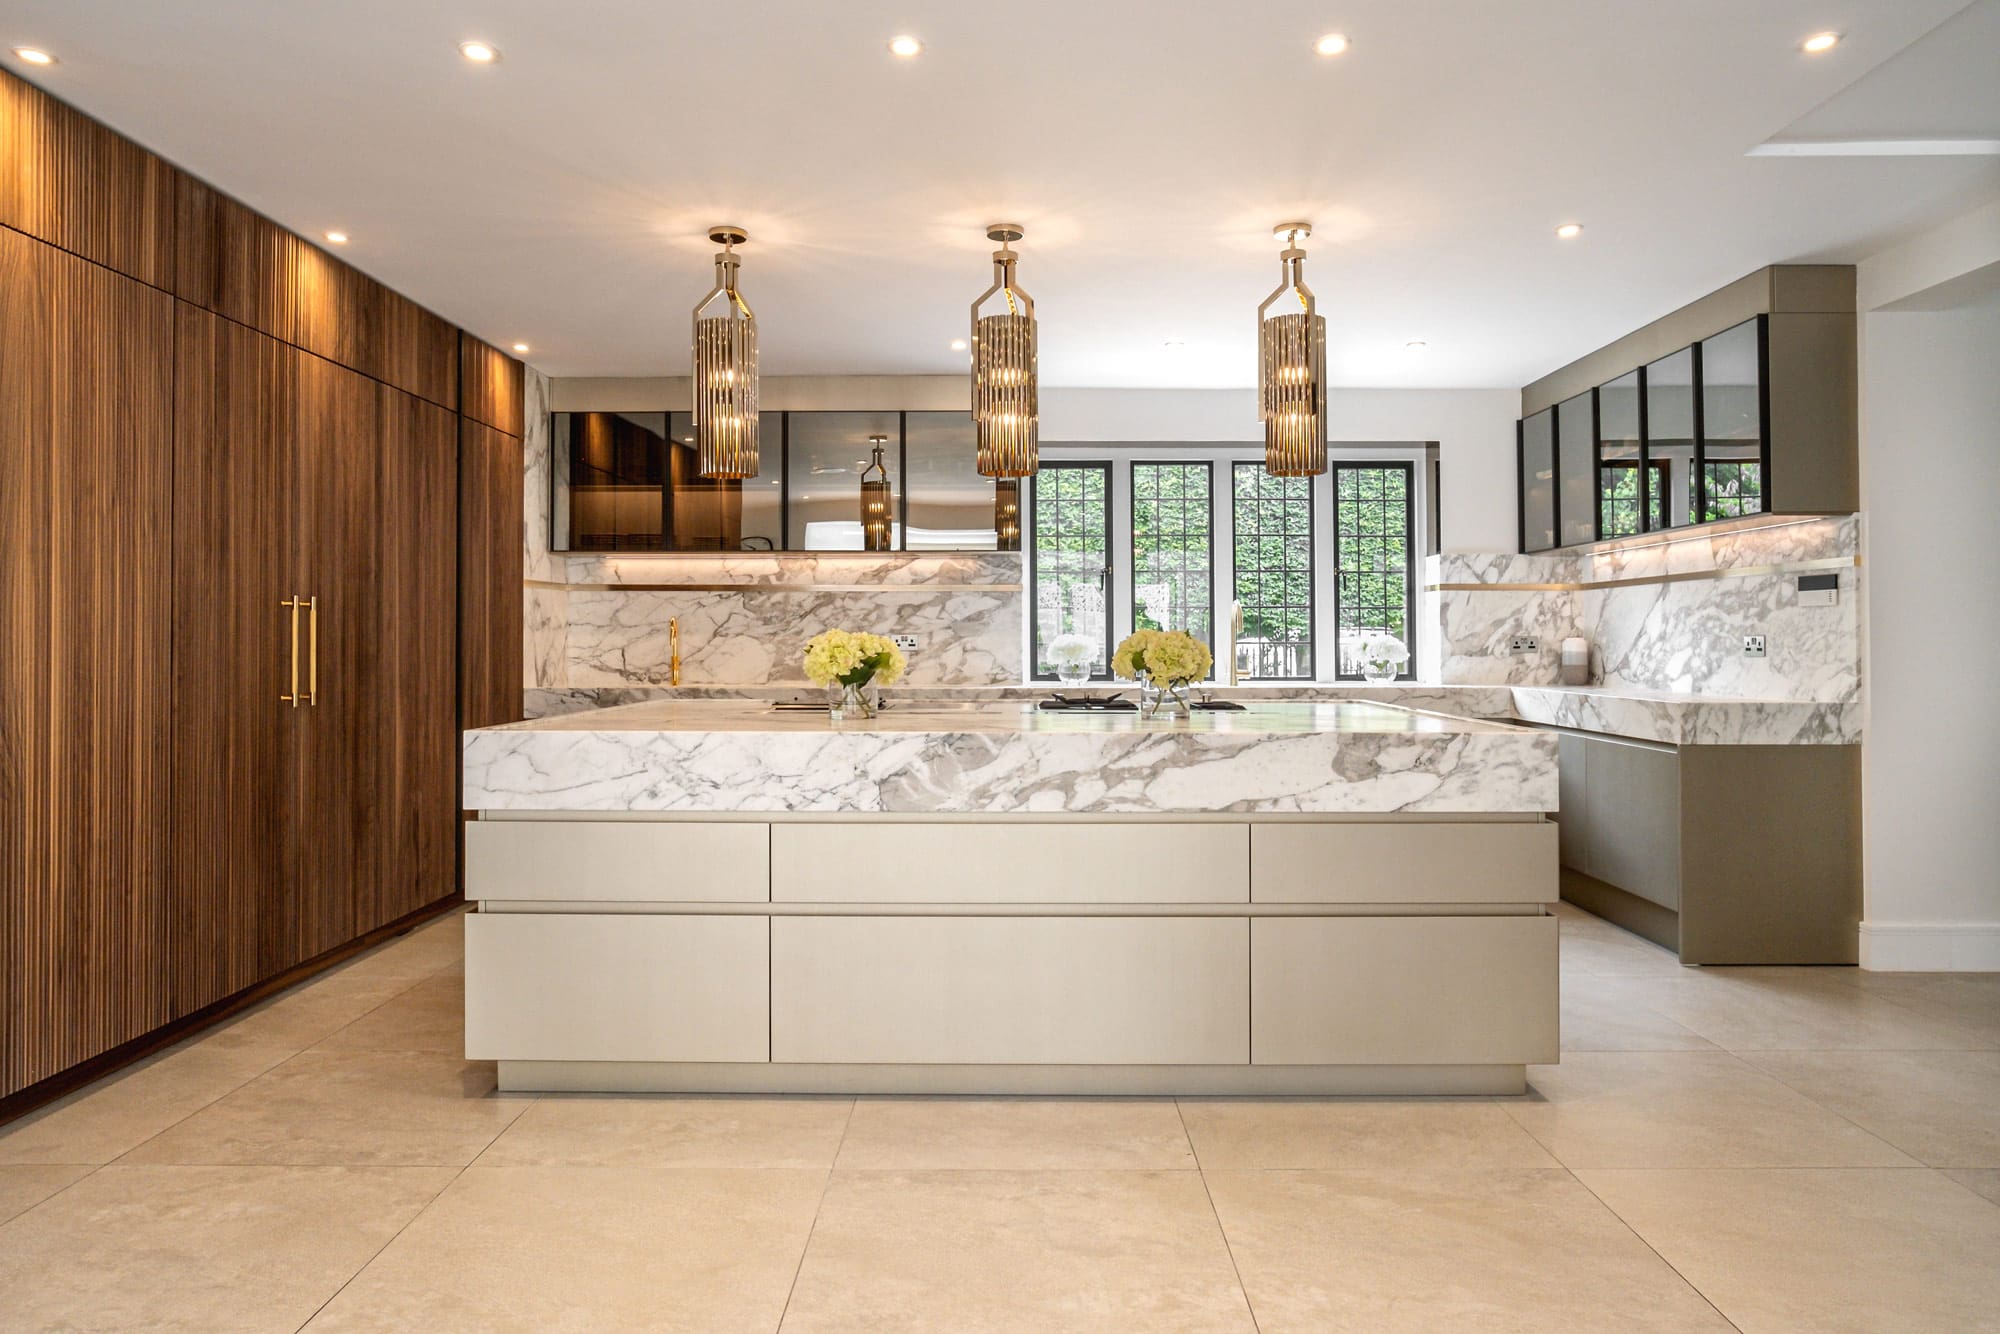 Moor Park Italian luxury kitchen by Fontana London using Key Cucine cabinetry